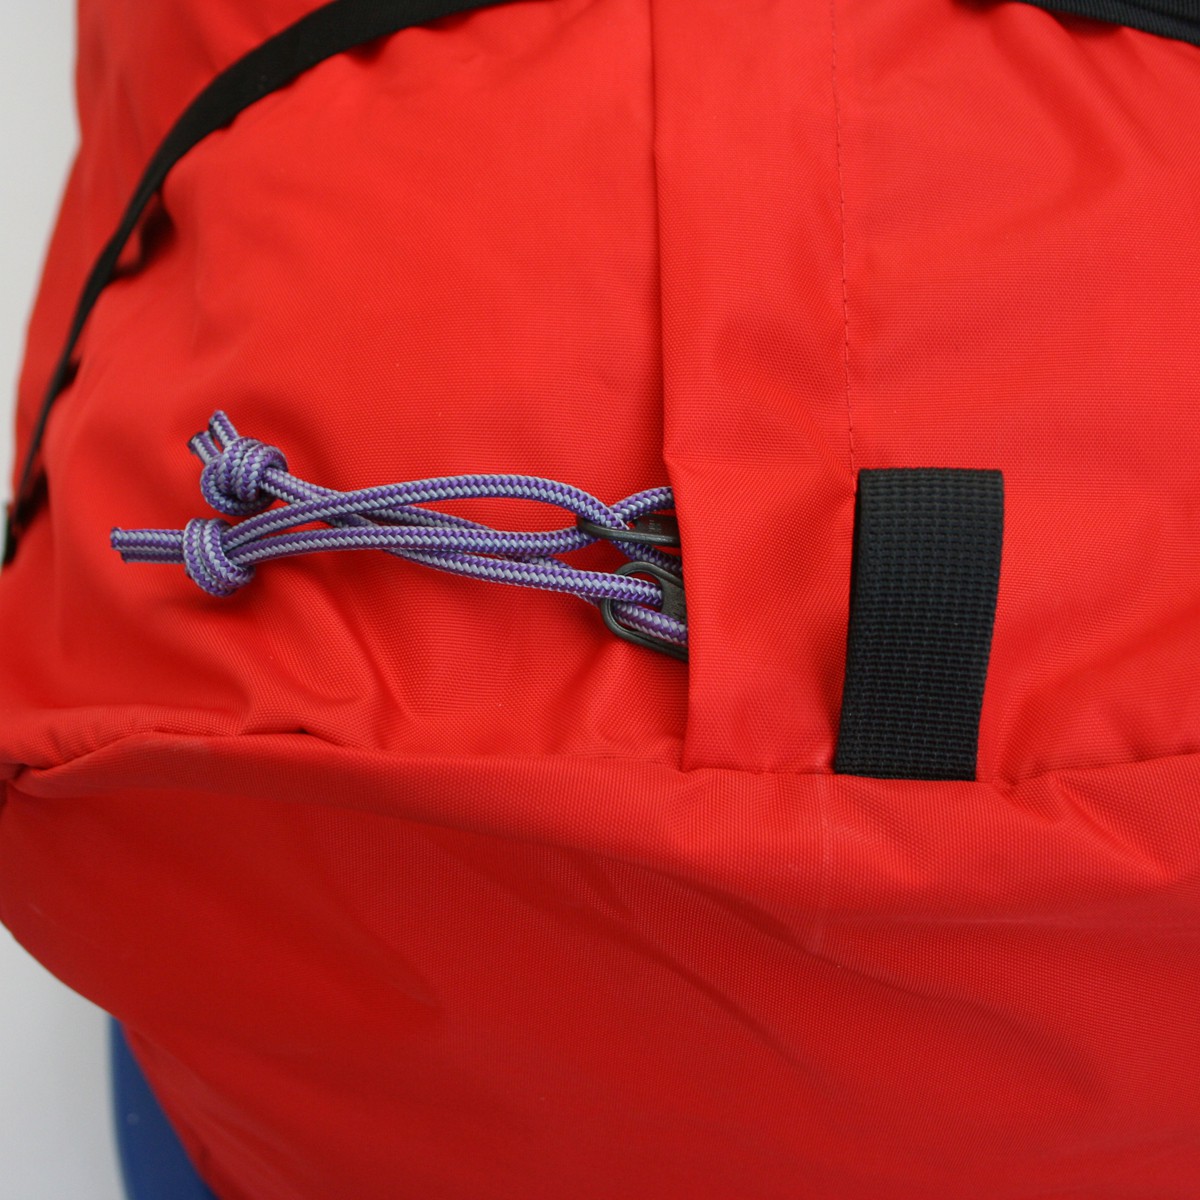 Sac de rangement pour pulka Snowsled Expedition - Expedition Pulk Bag